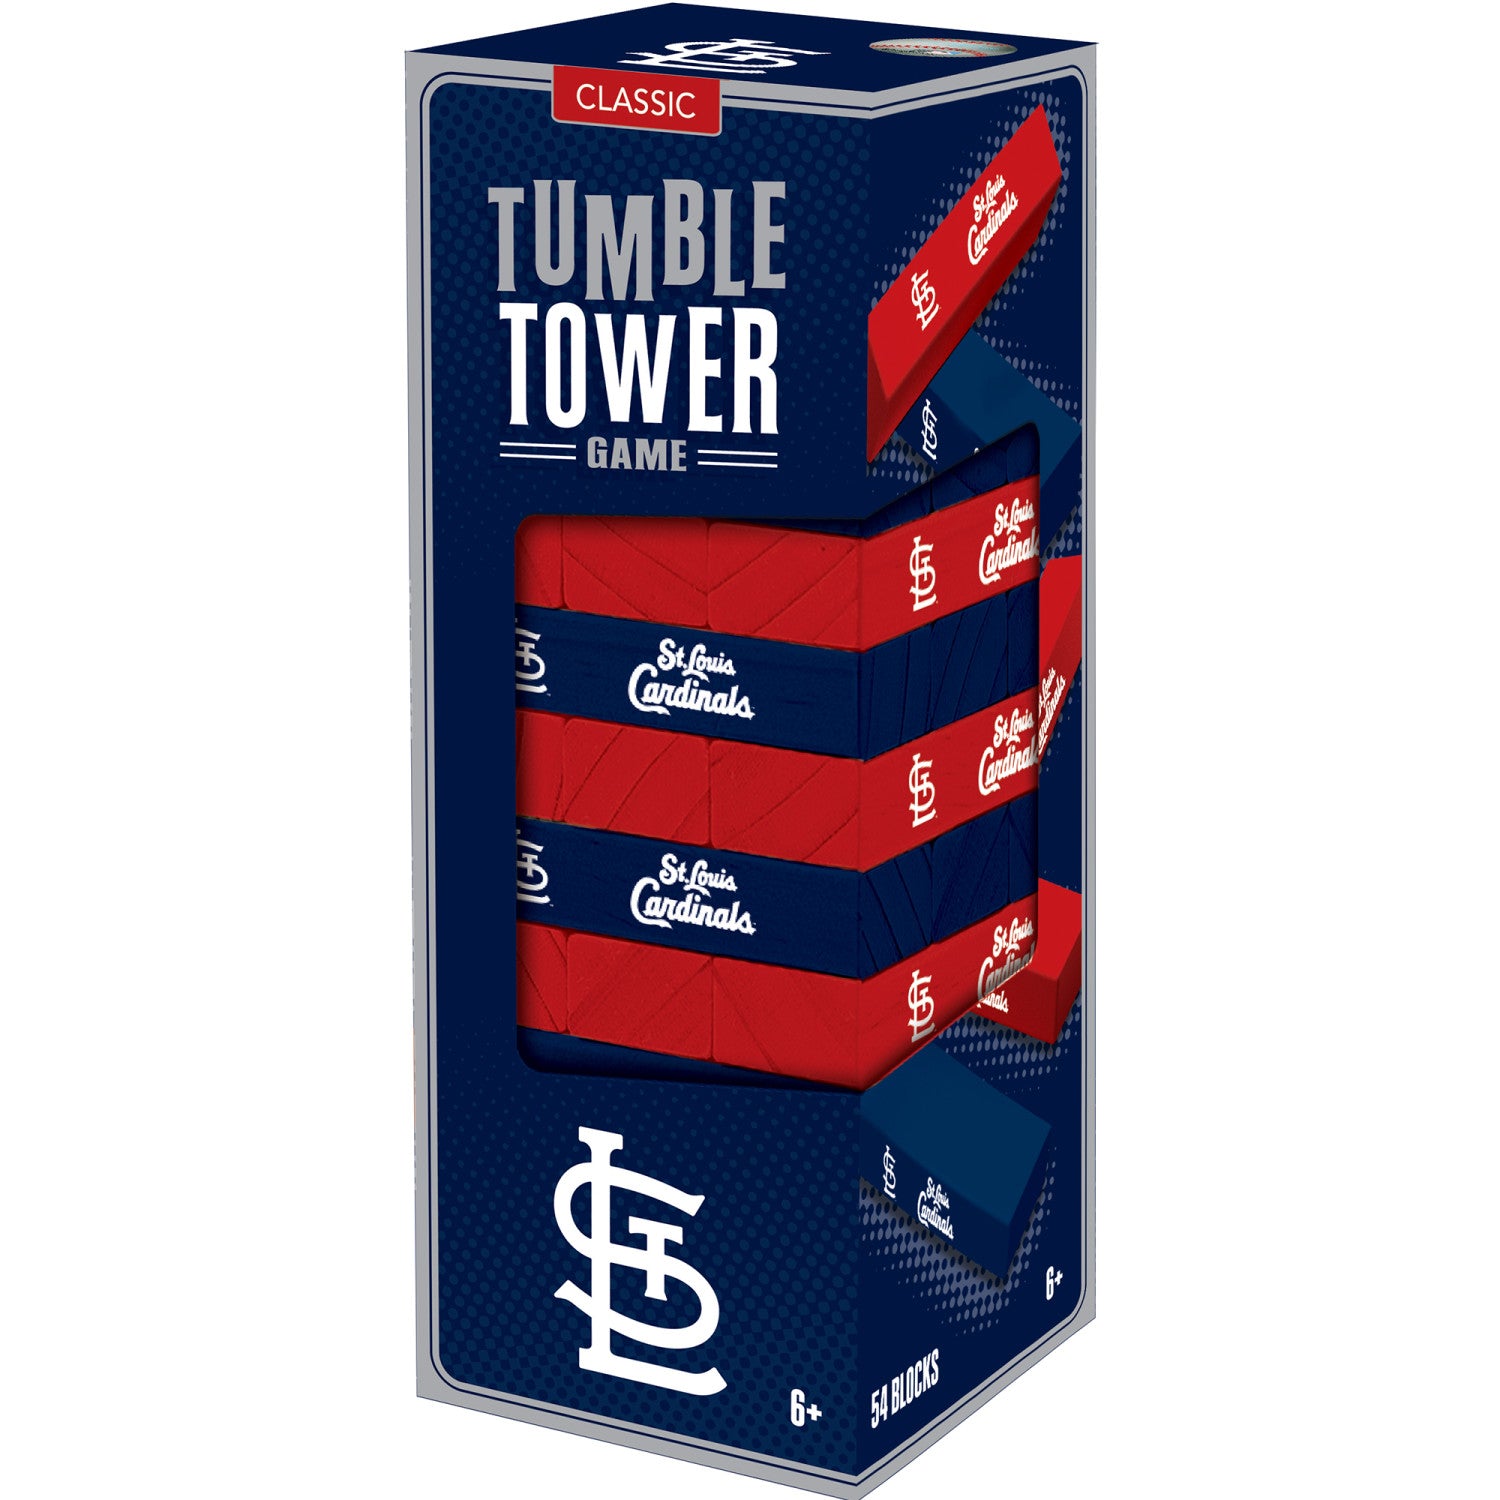 St. Louis Cardinals Tumble Tower